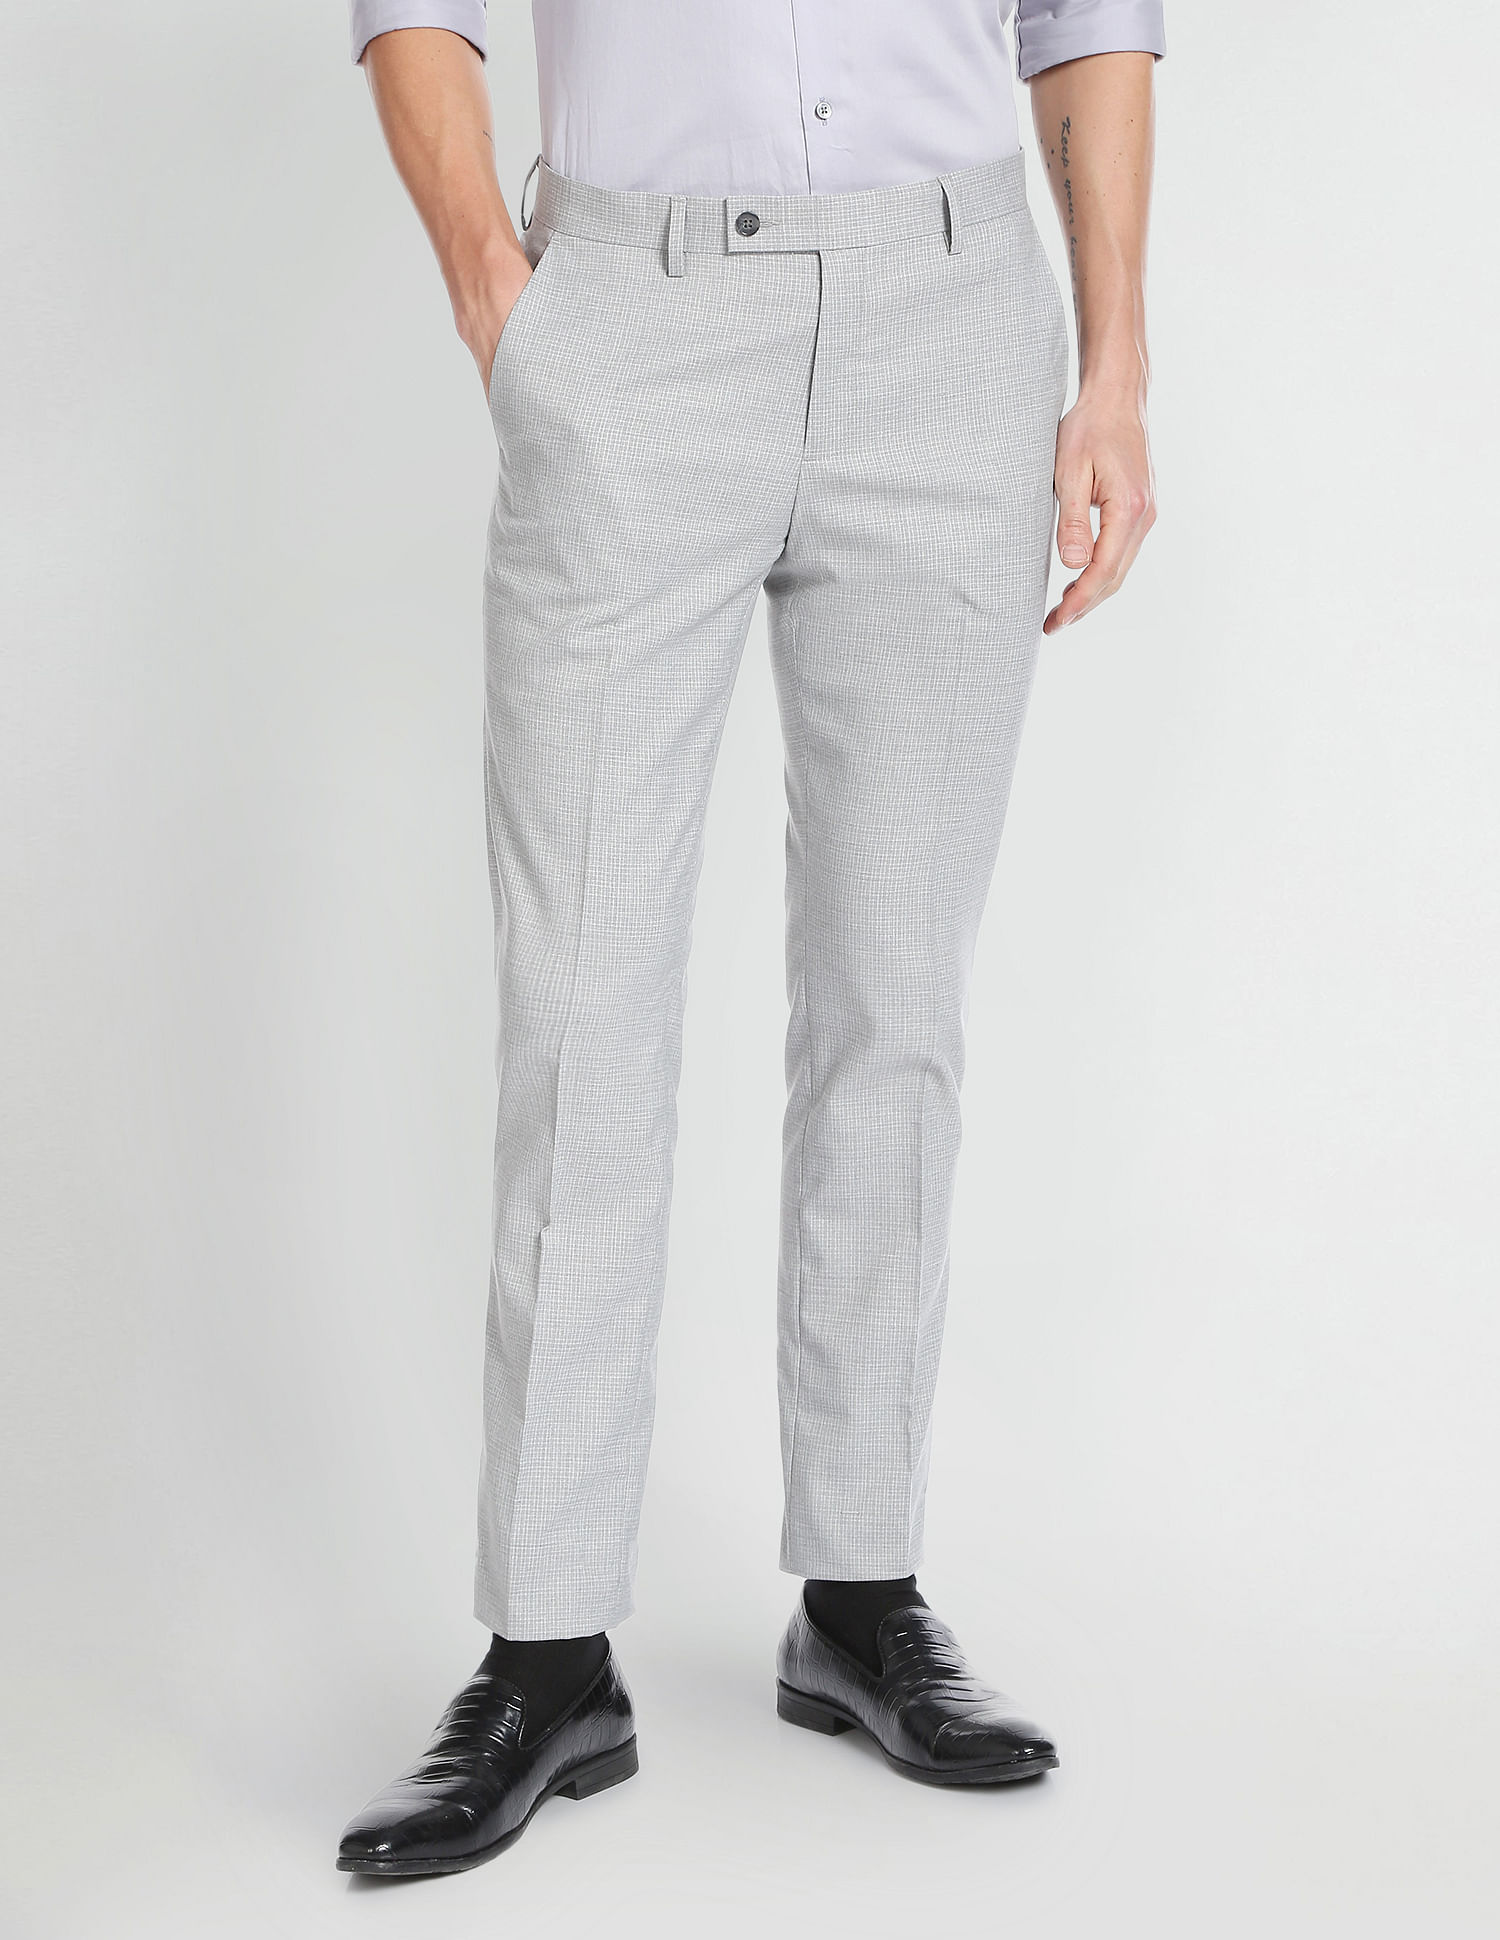 Mens Check Formal Trousers Slim Fit Cotton Vintage Smart Office Business  Pants | eBay